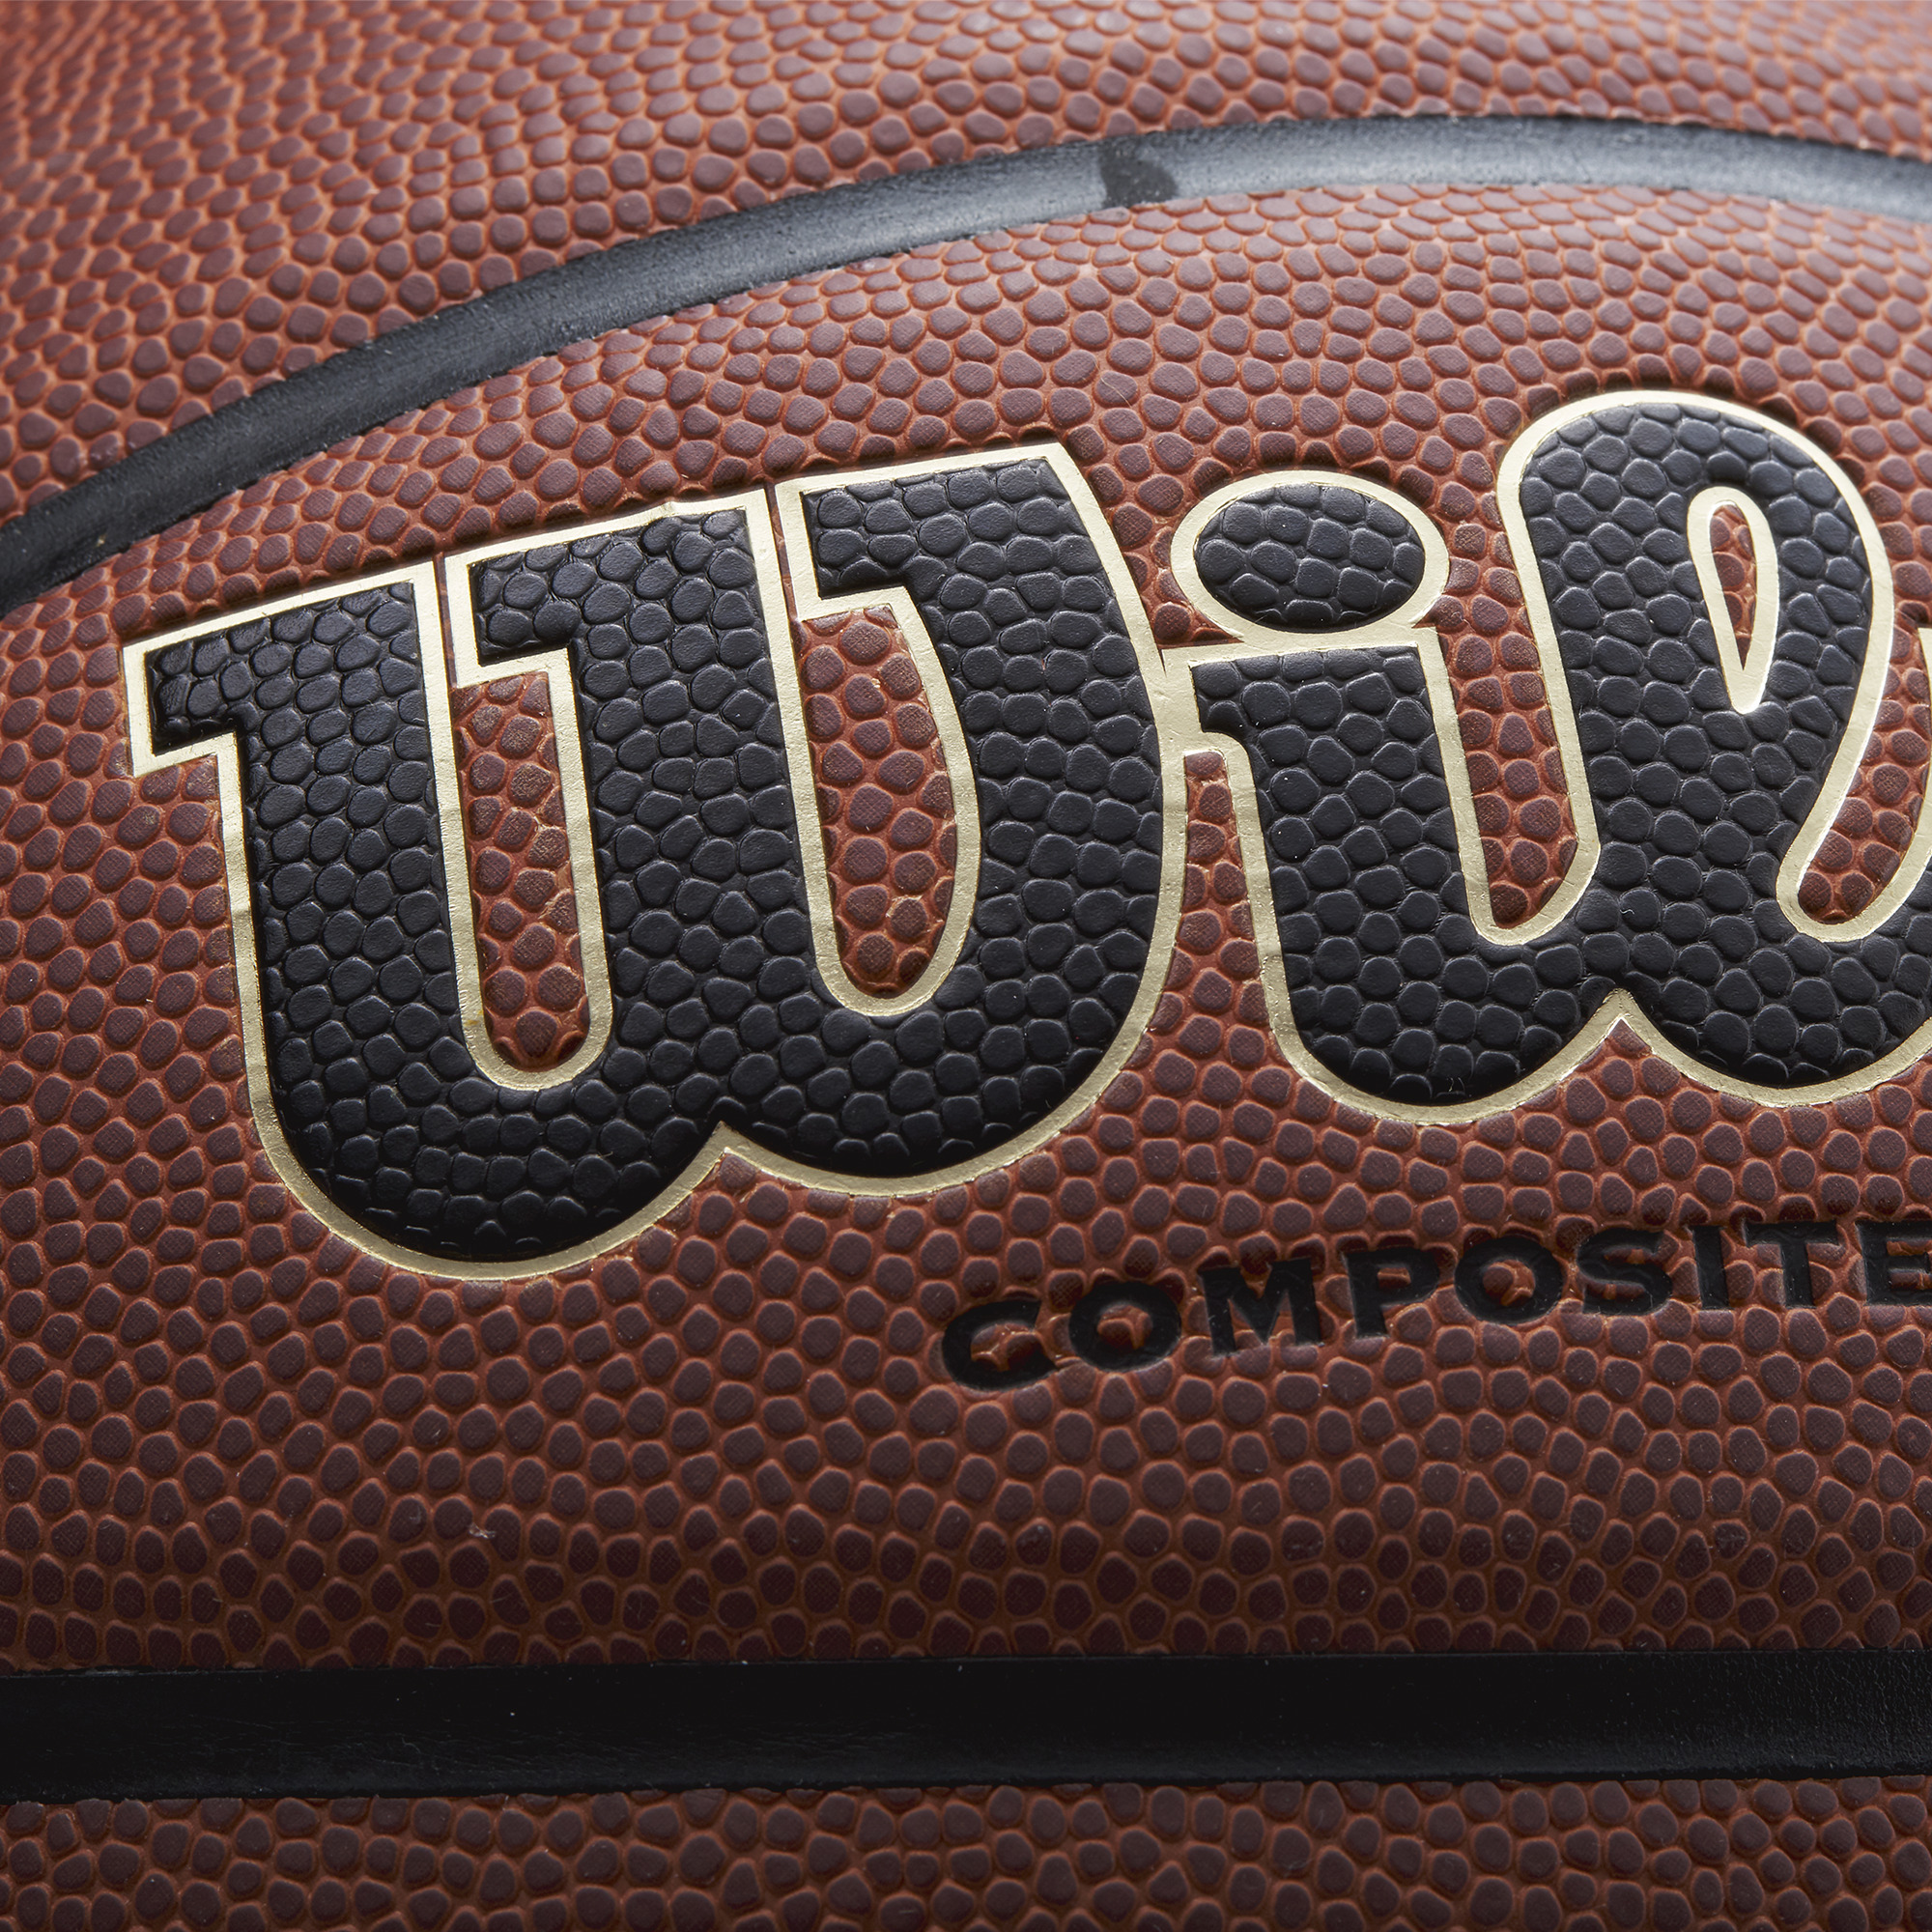 Wilson NCAA Final Four Edition Basketball, Intermediate Size - 28.5" - image 3 of 6